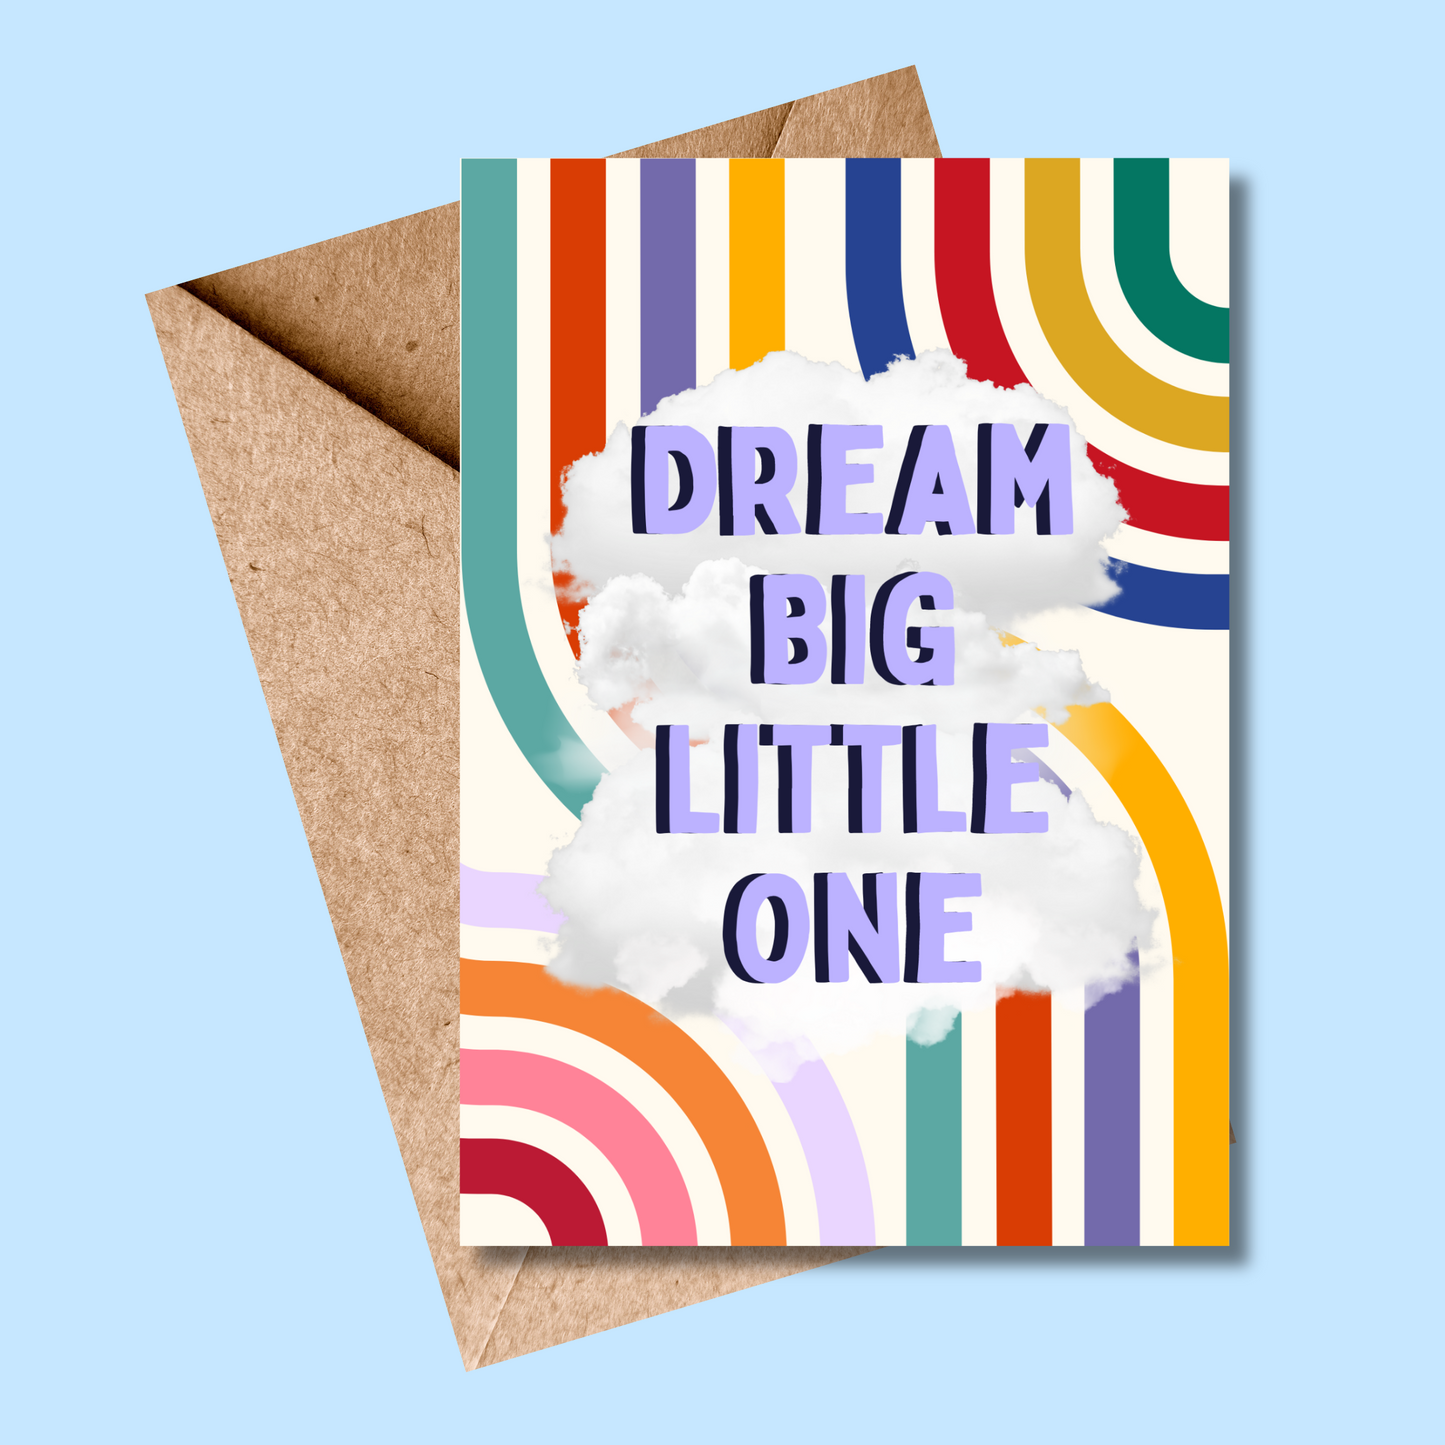 Dream big little one (5x7” print/card)